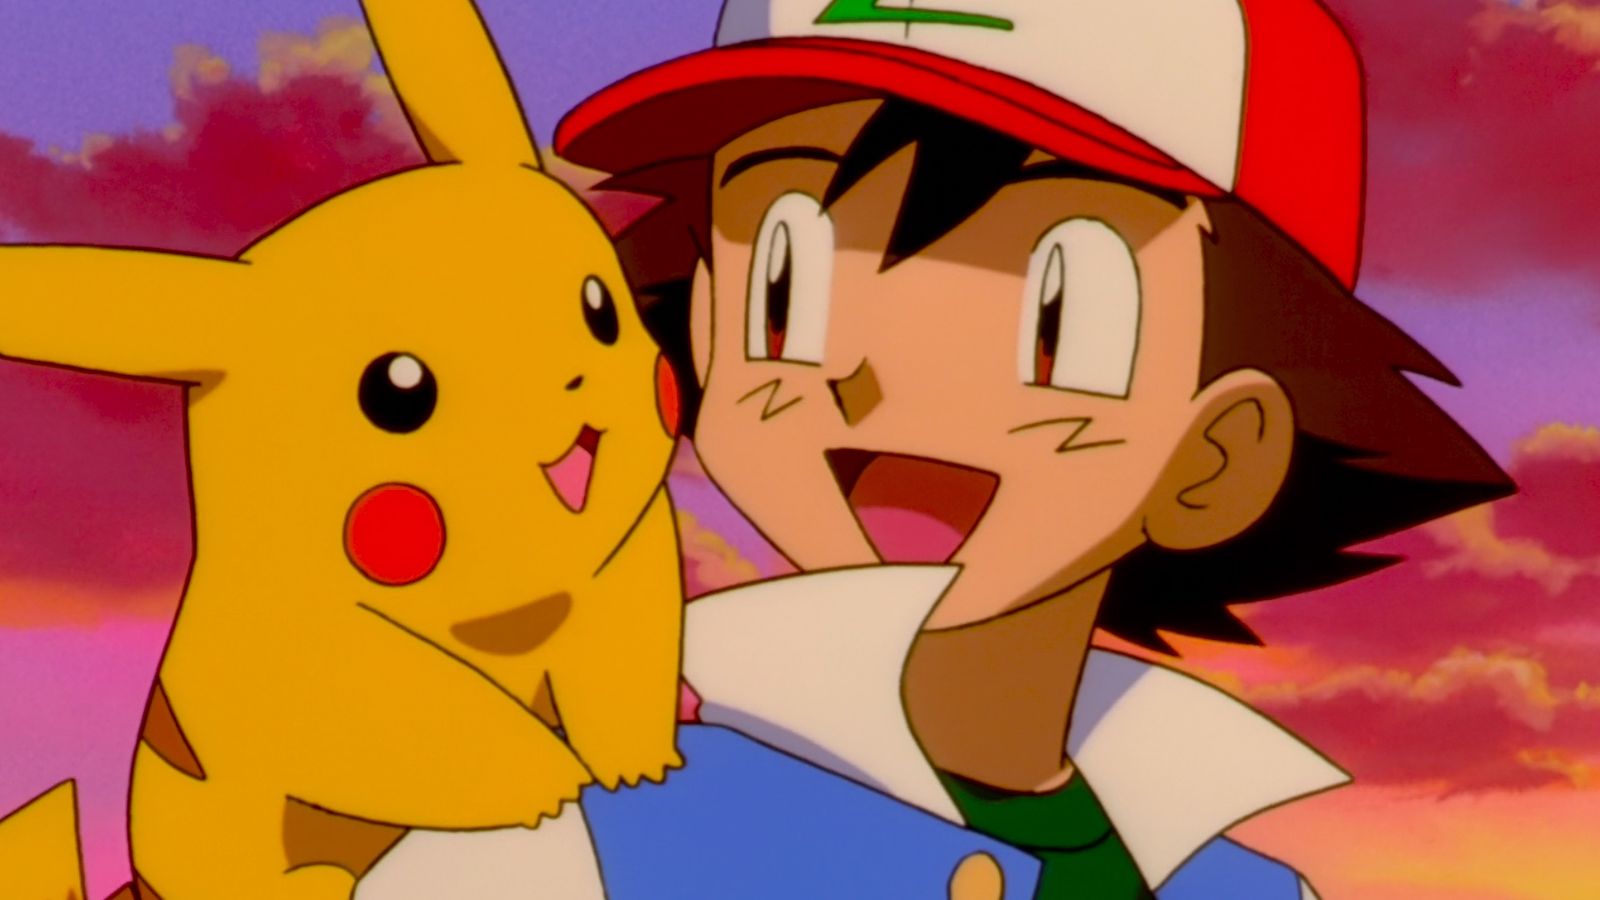 Ash Ketchum OG voice actor Veronica Taylor in Pokémon the movie 2000